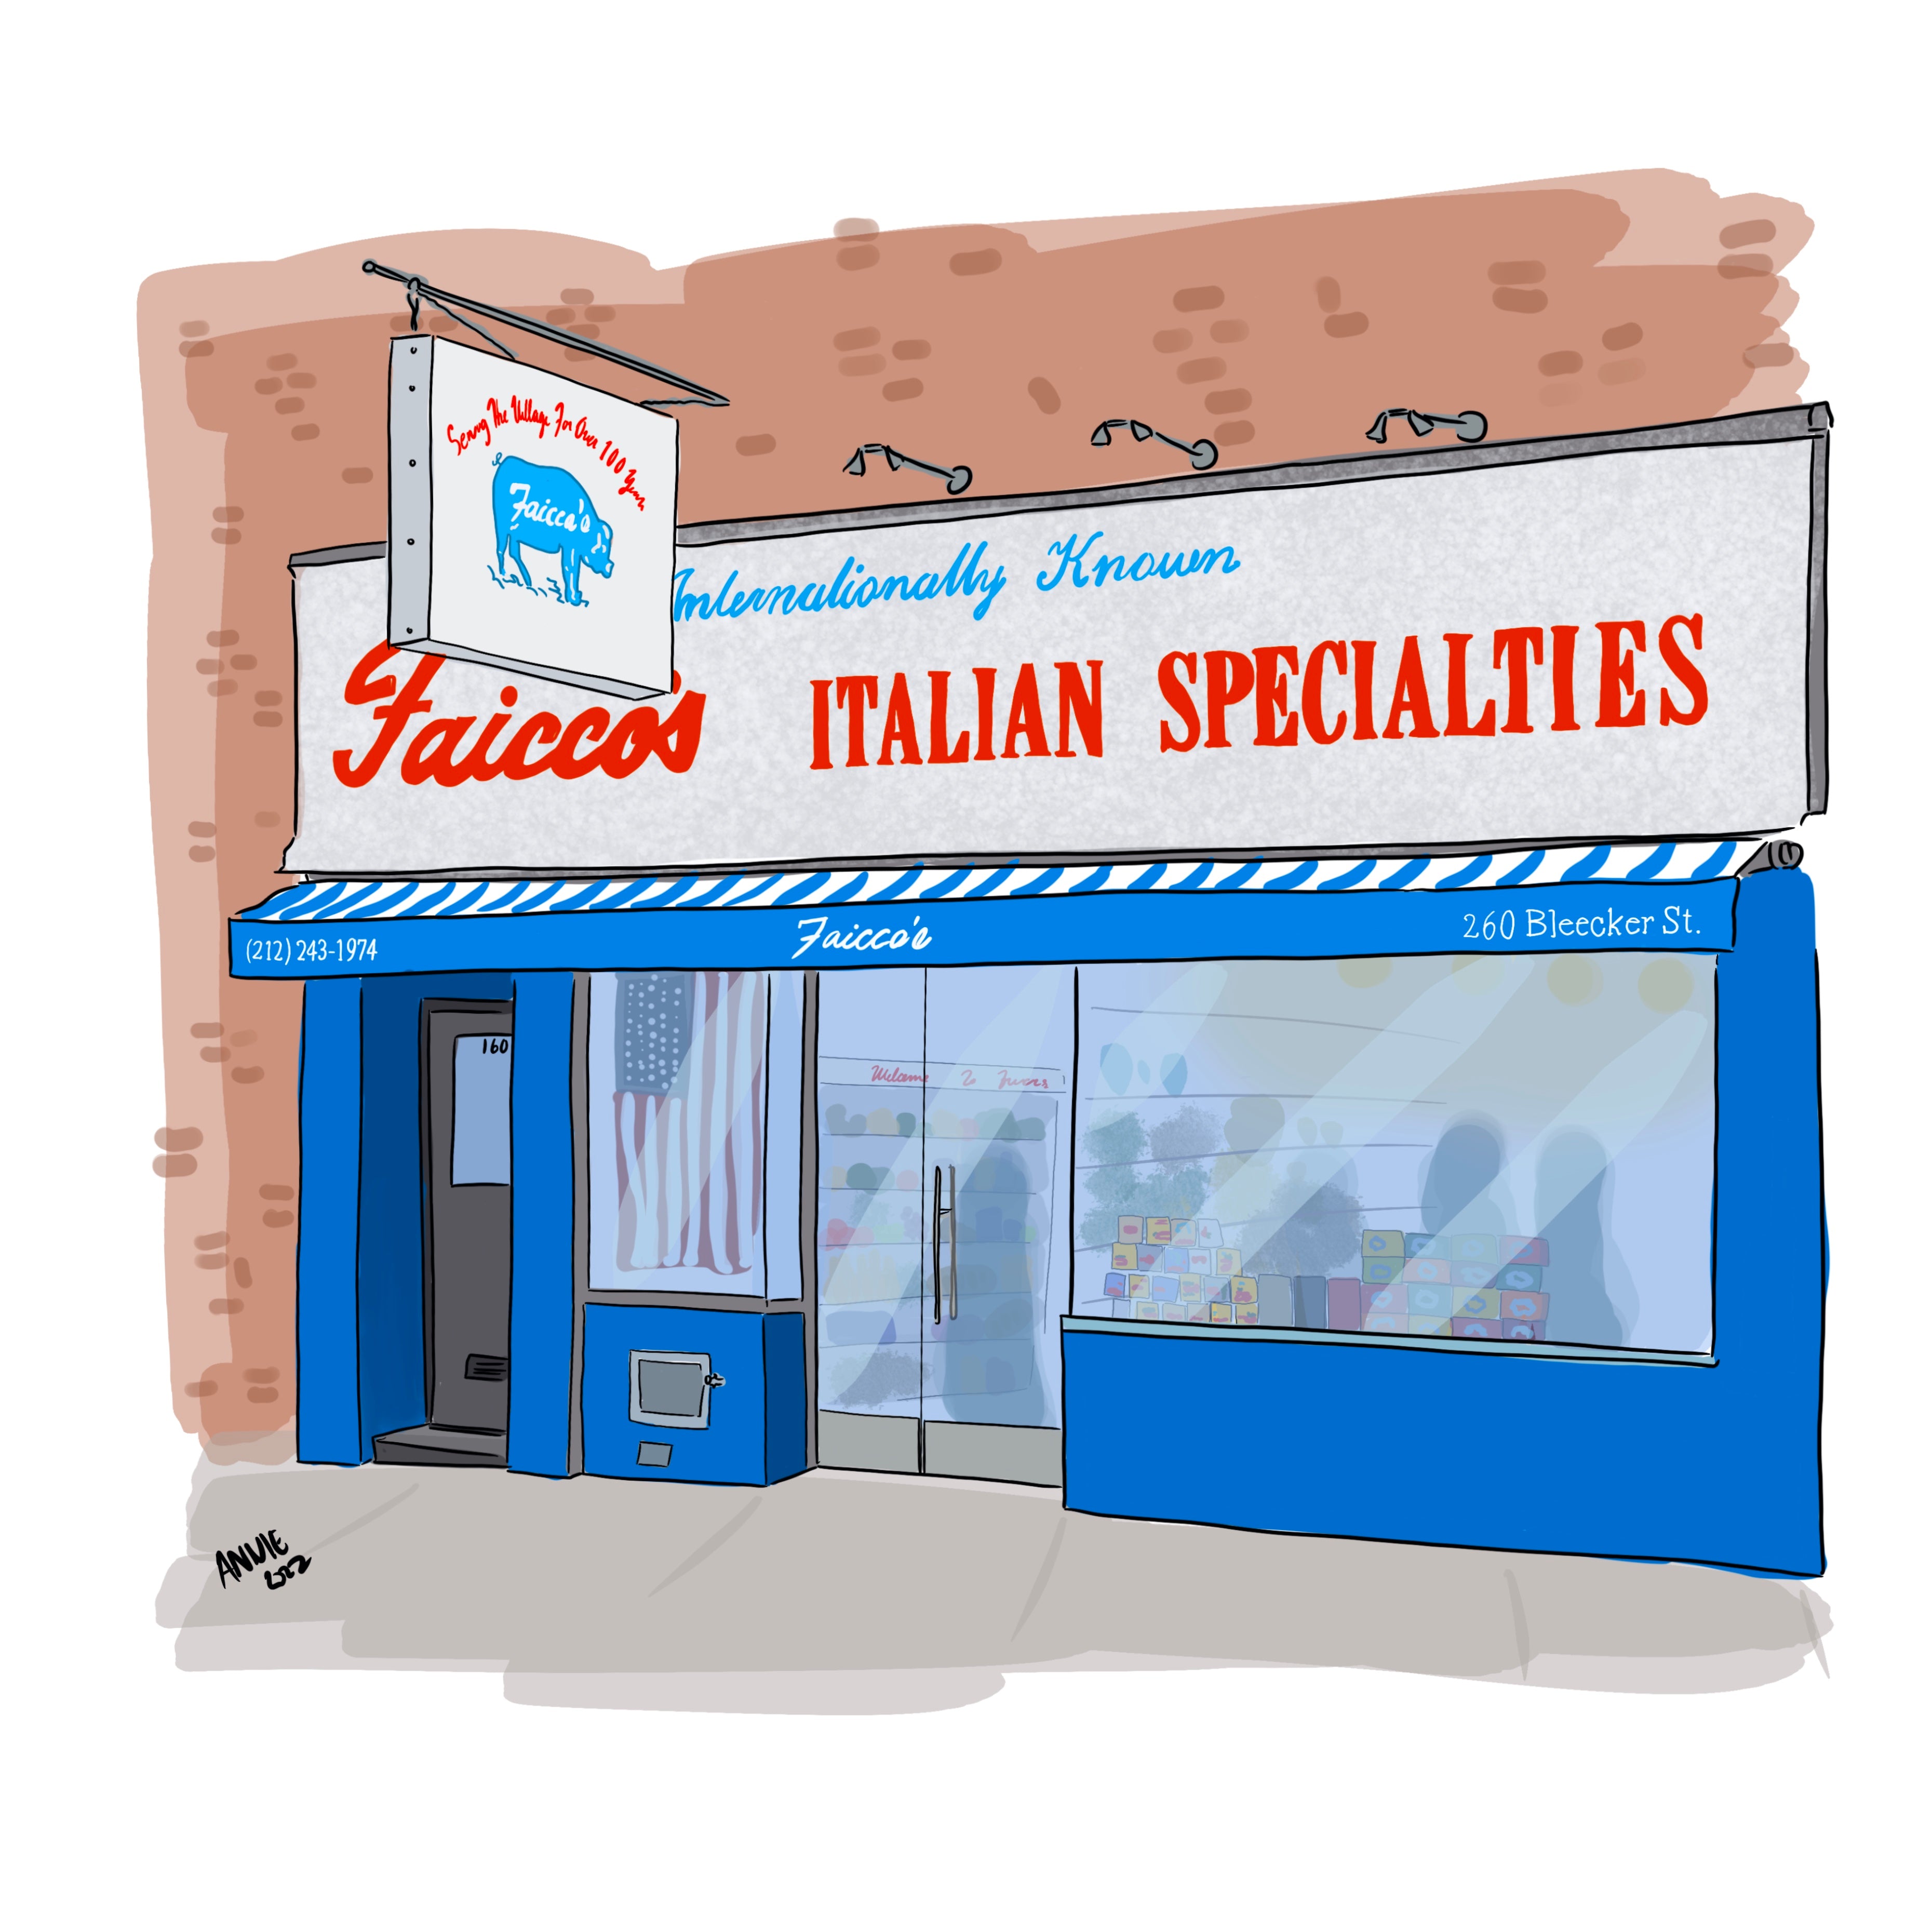 Faicco's Italian Specialties